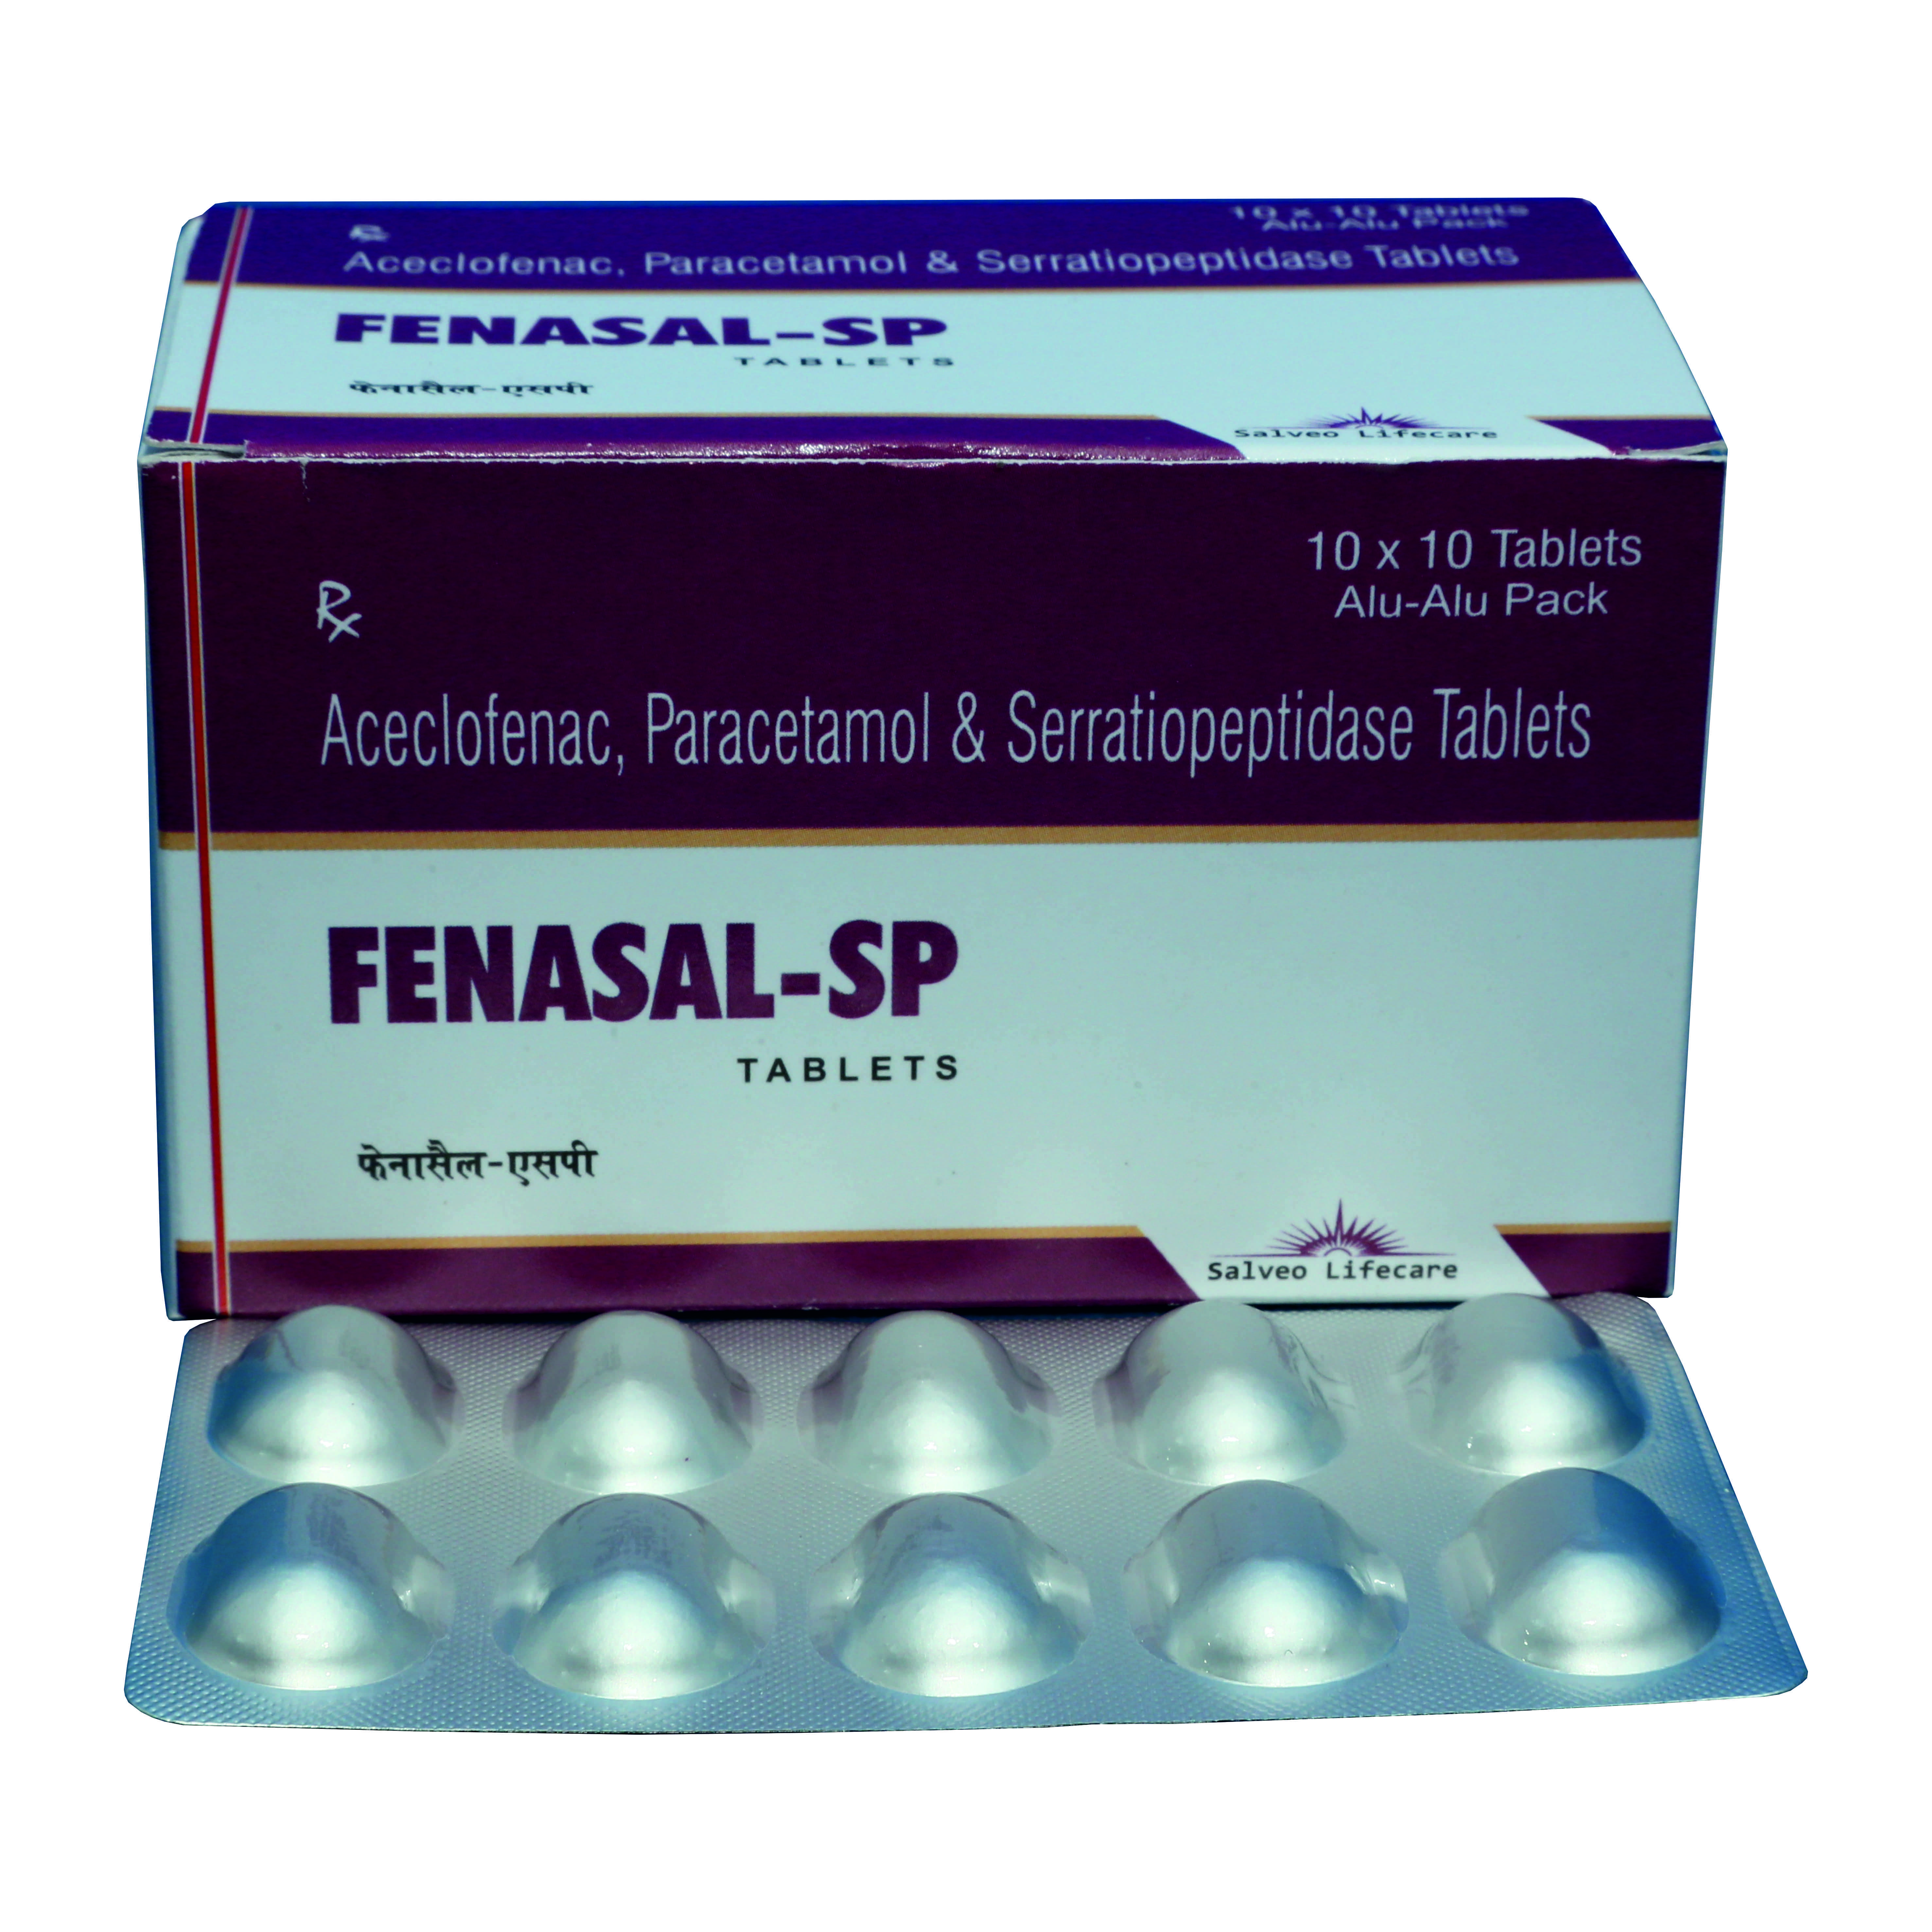 aceclofenac 100mg, paracetamol 325 mg
serratiopeptidase 15 mg